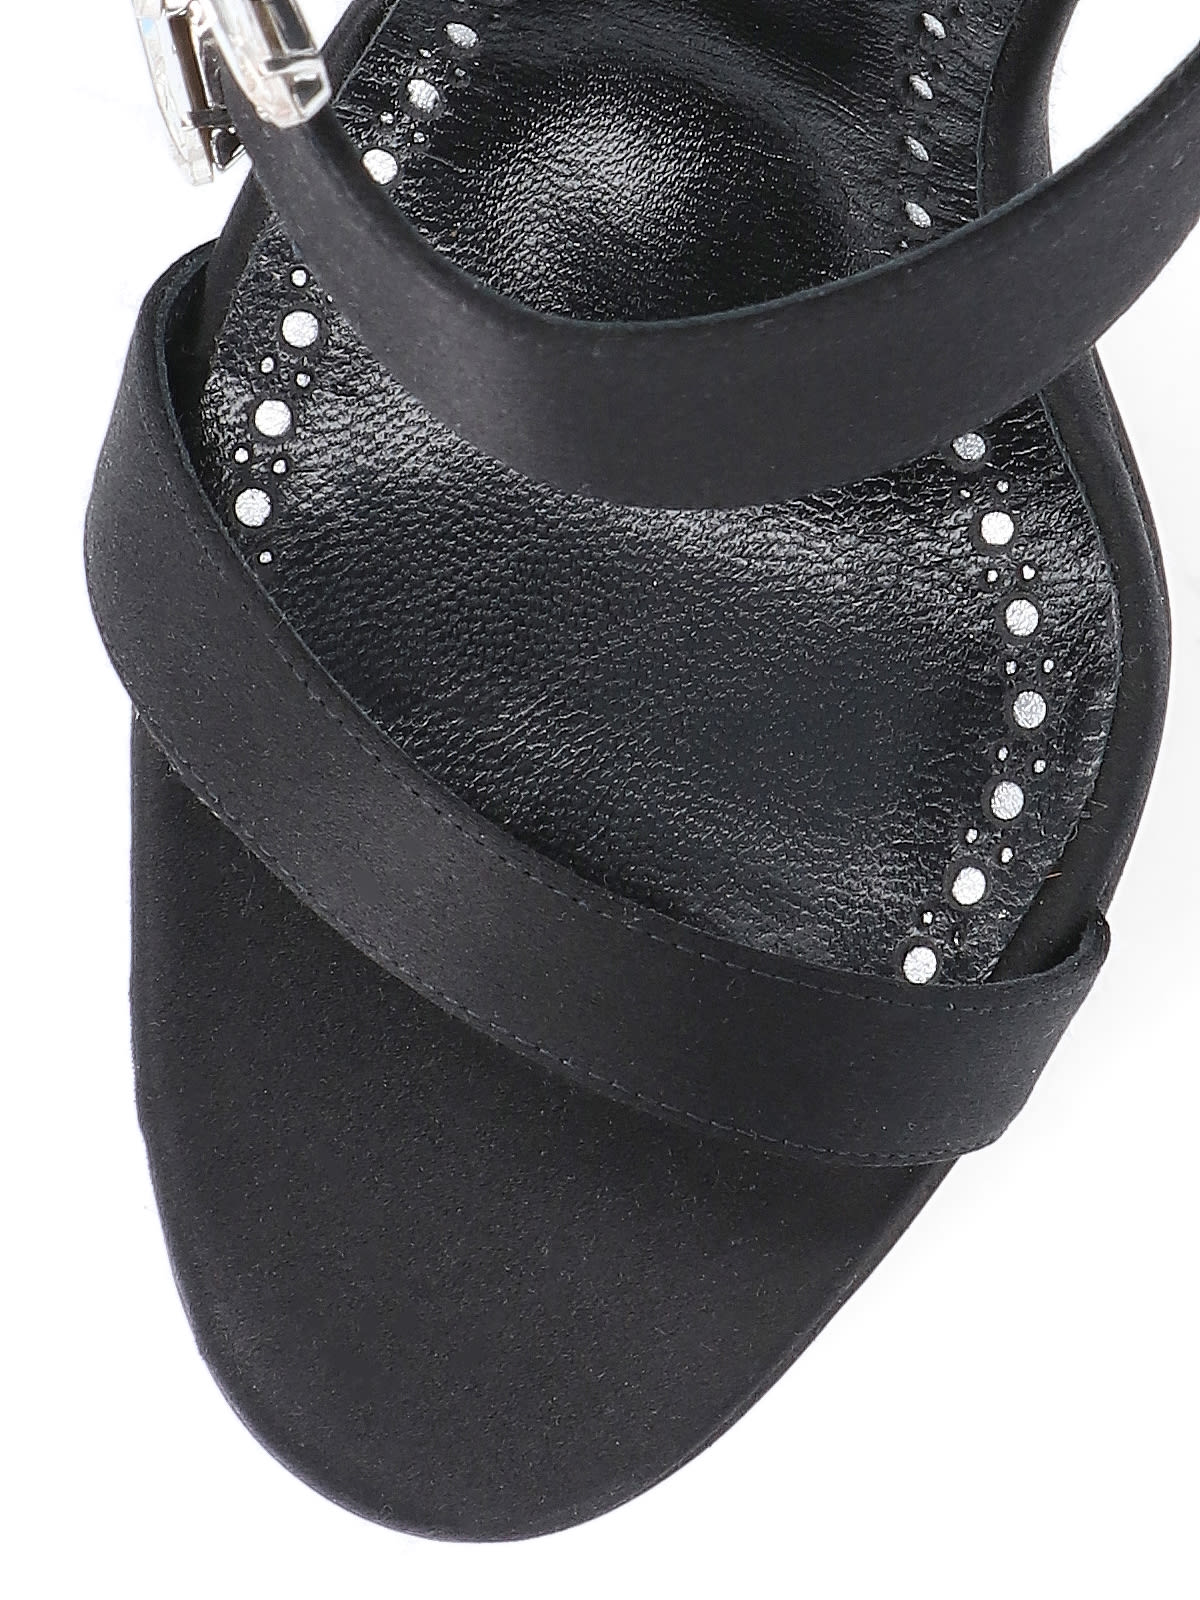 Shop Manolo Blahnik Chivela Sandals In Black